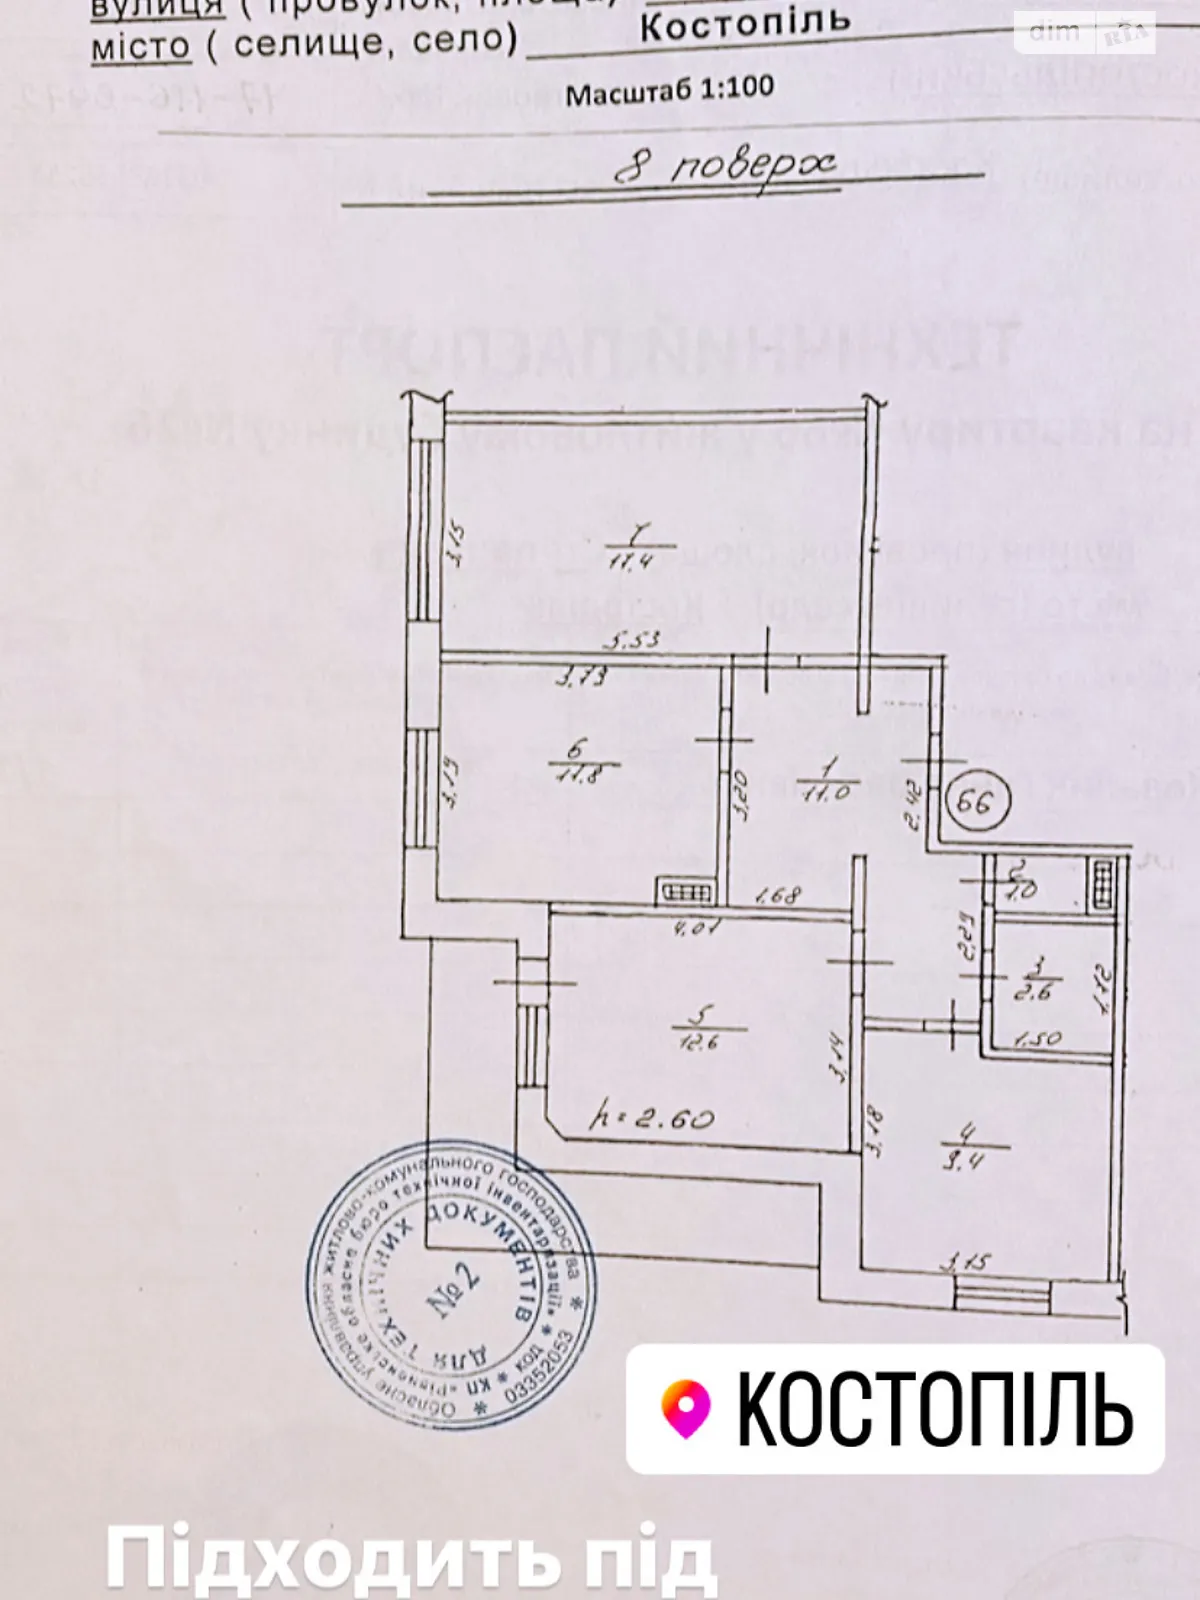 Продается 3-комнатная квартира 68.5 кв. м в Костополе, цена: 28000 $ - фото 1